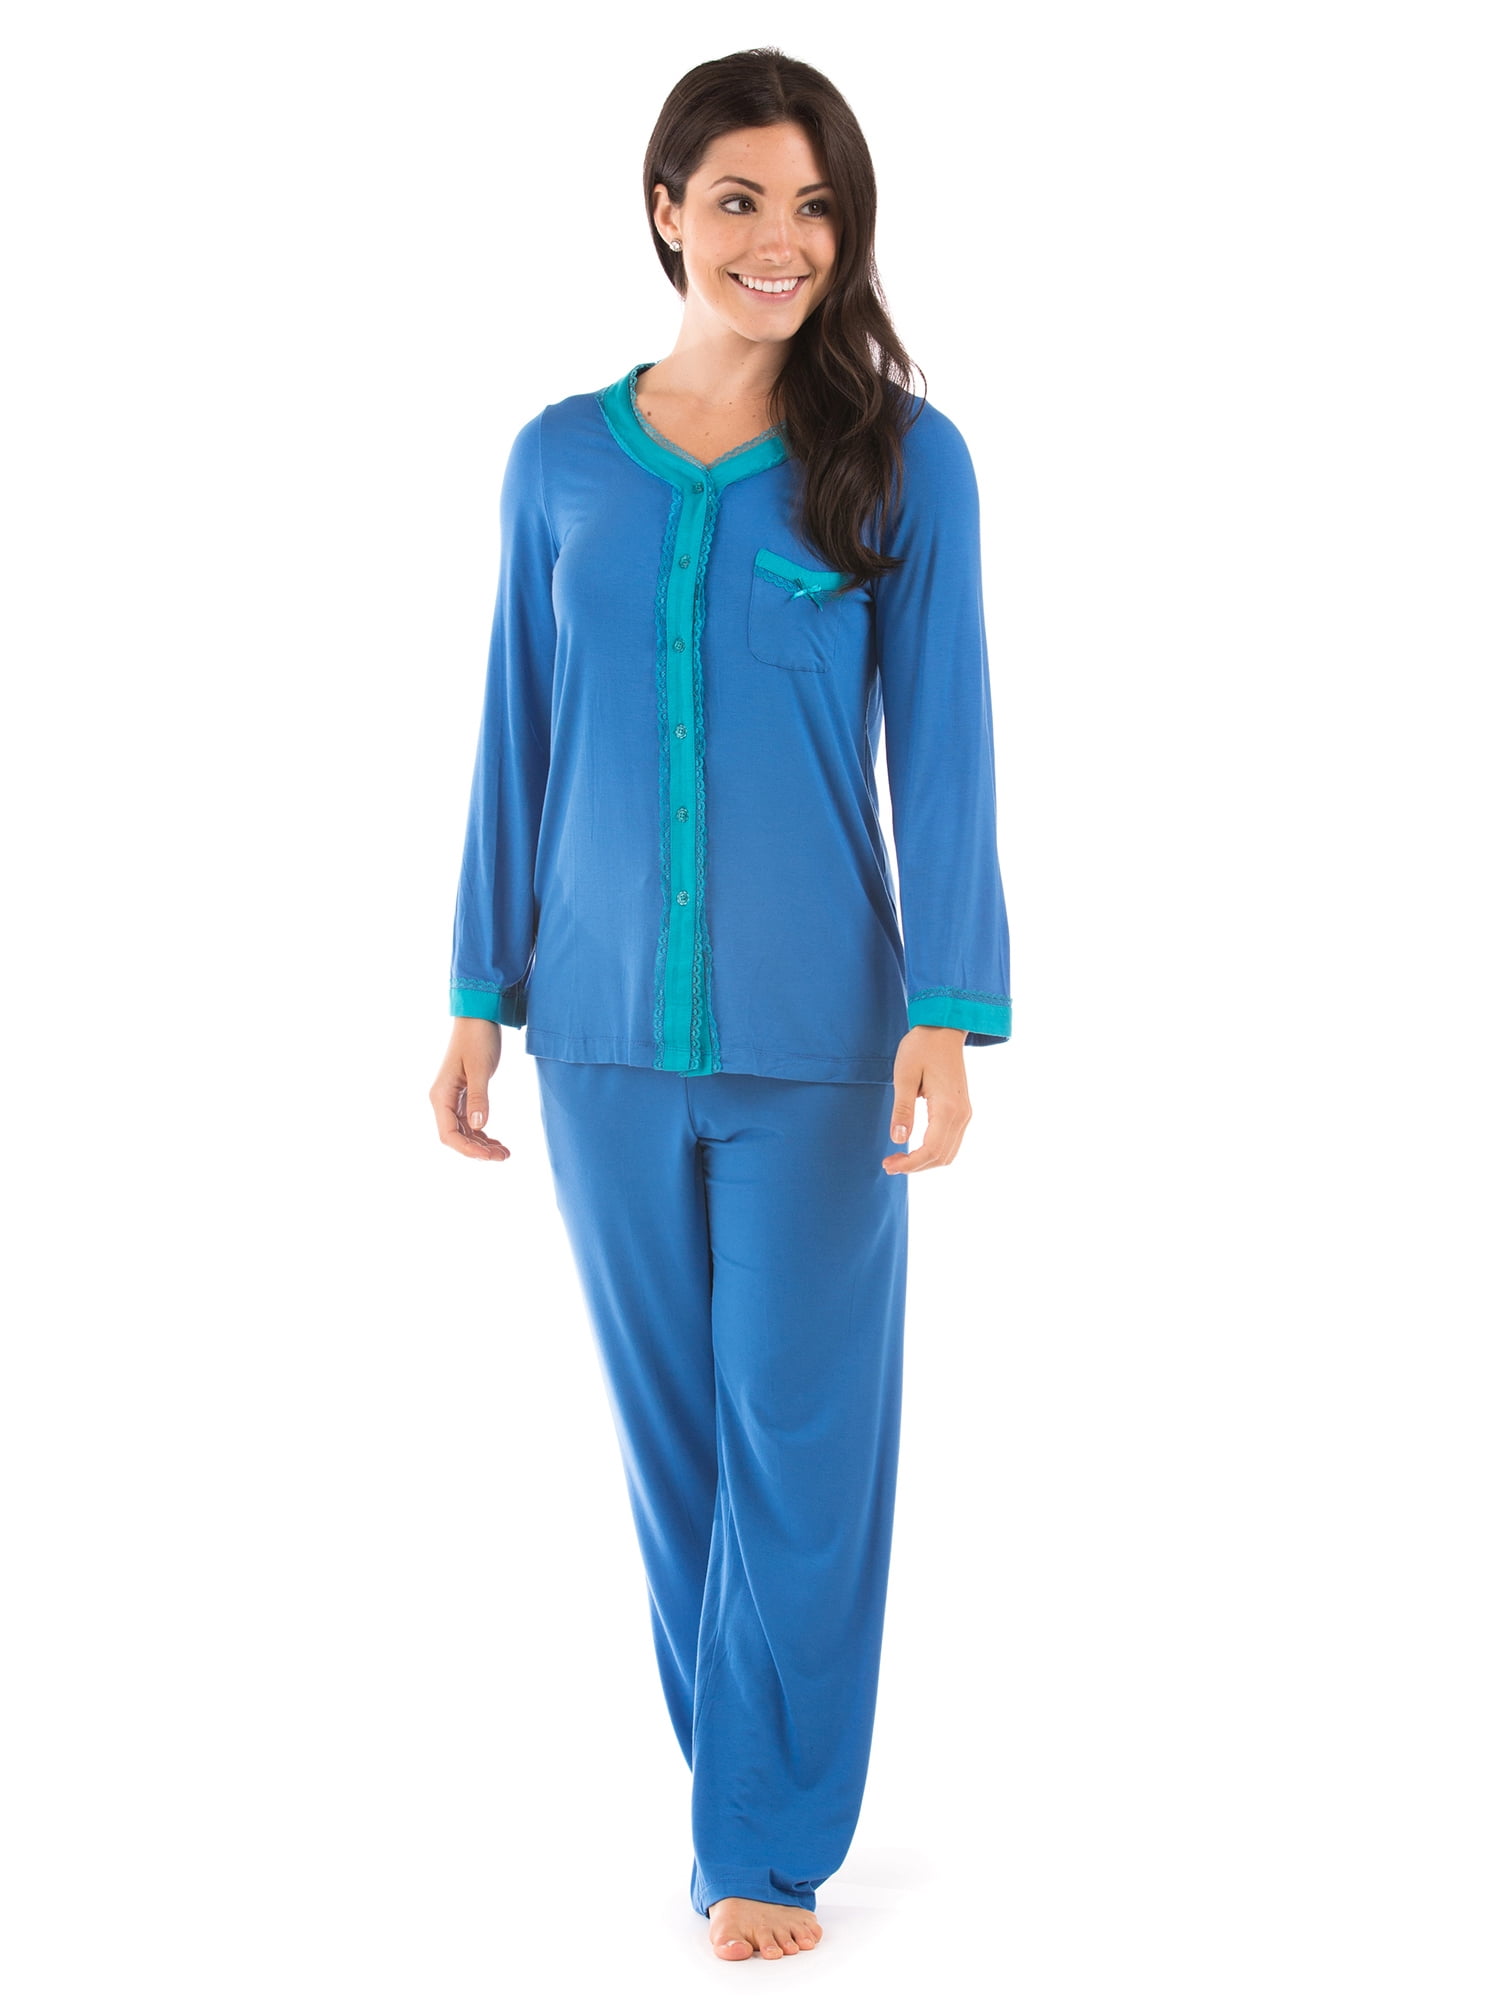 Texere Women's Long Sleeve Pajama Set - Beautiful Sleepwear for Women